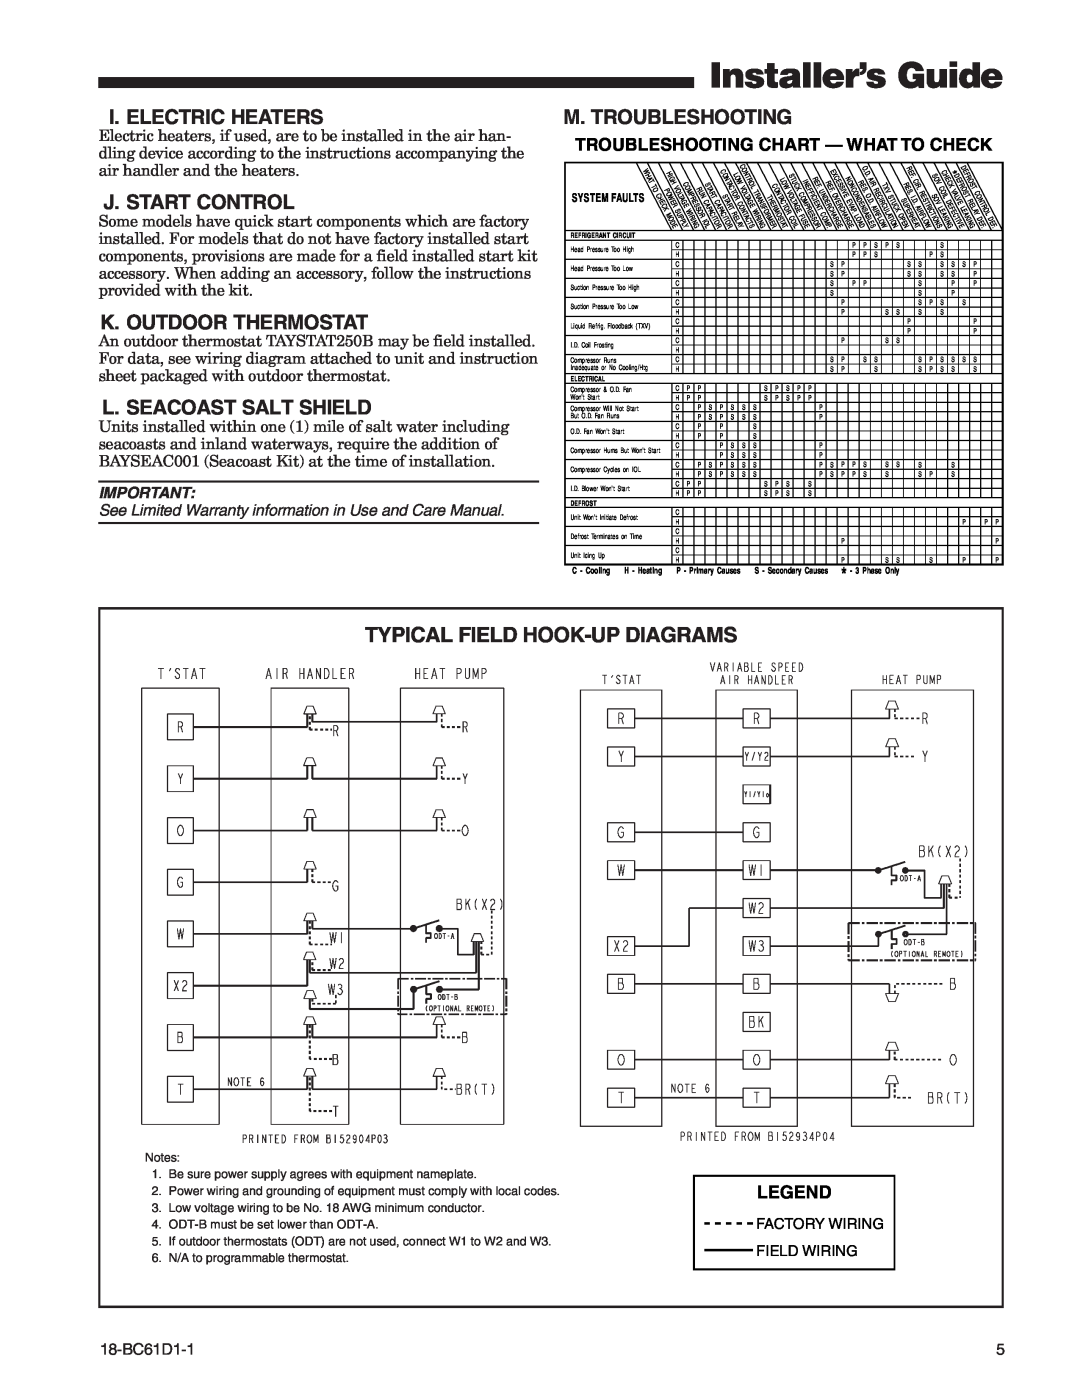 Trane 4TWB3 manual Installer’s Guide, I. Electric Heaters, J. Start Control, K. Outdoor Thermostat, L. Seacoast Salt Shield 